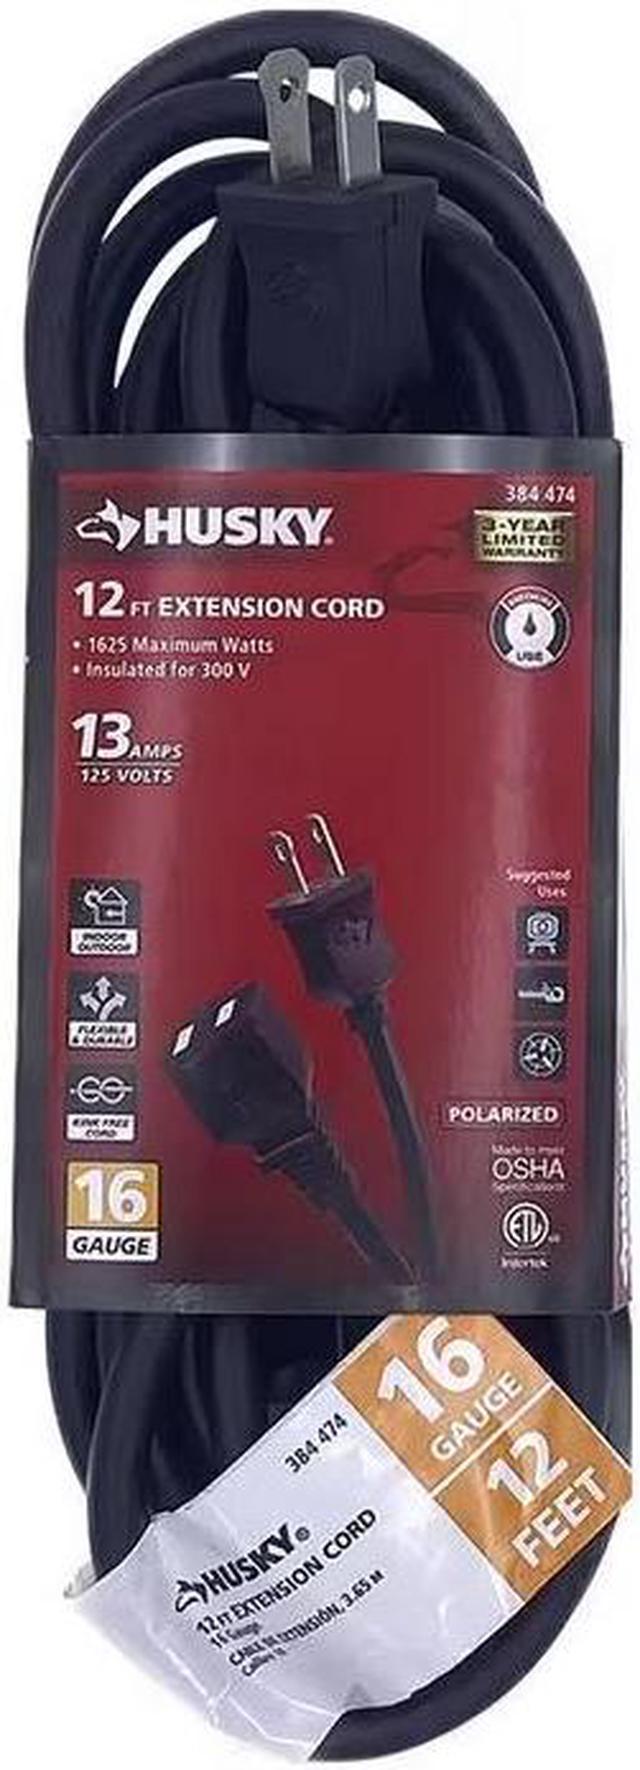 12 ft. 16/2 Medium Duty Indoor/Outdoor Extension Cord, Black Husky # FSEX07  # 384474 